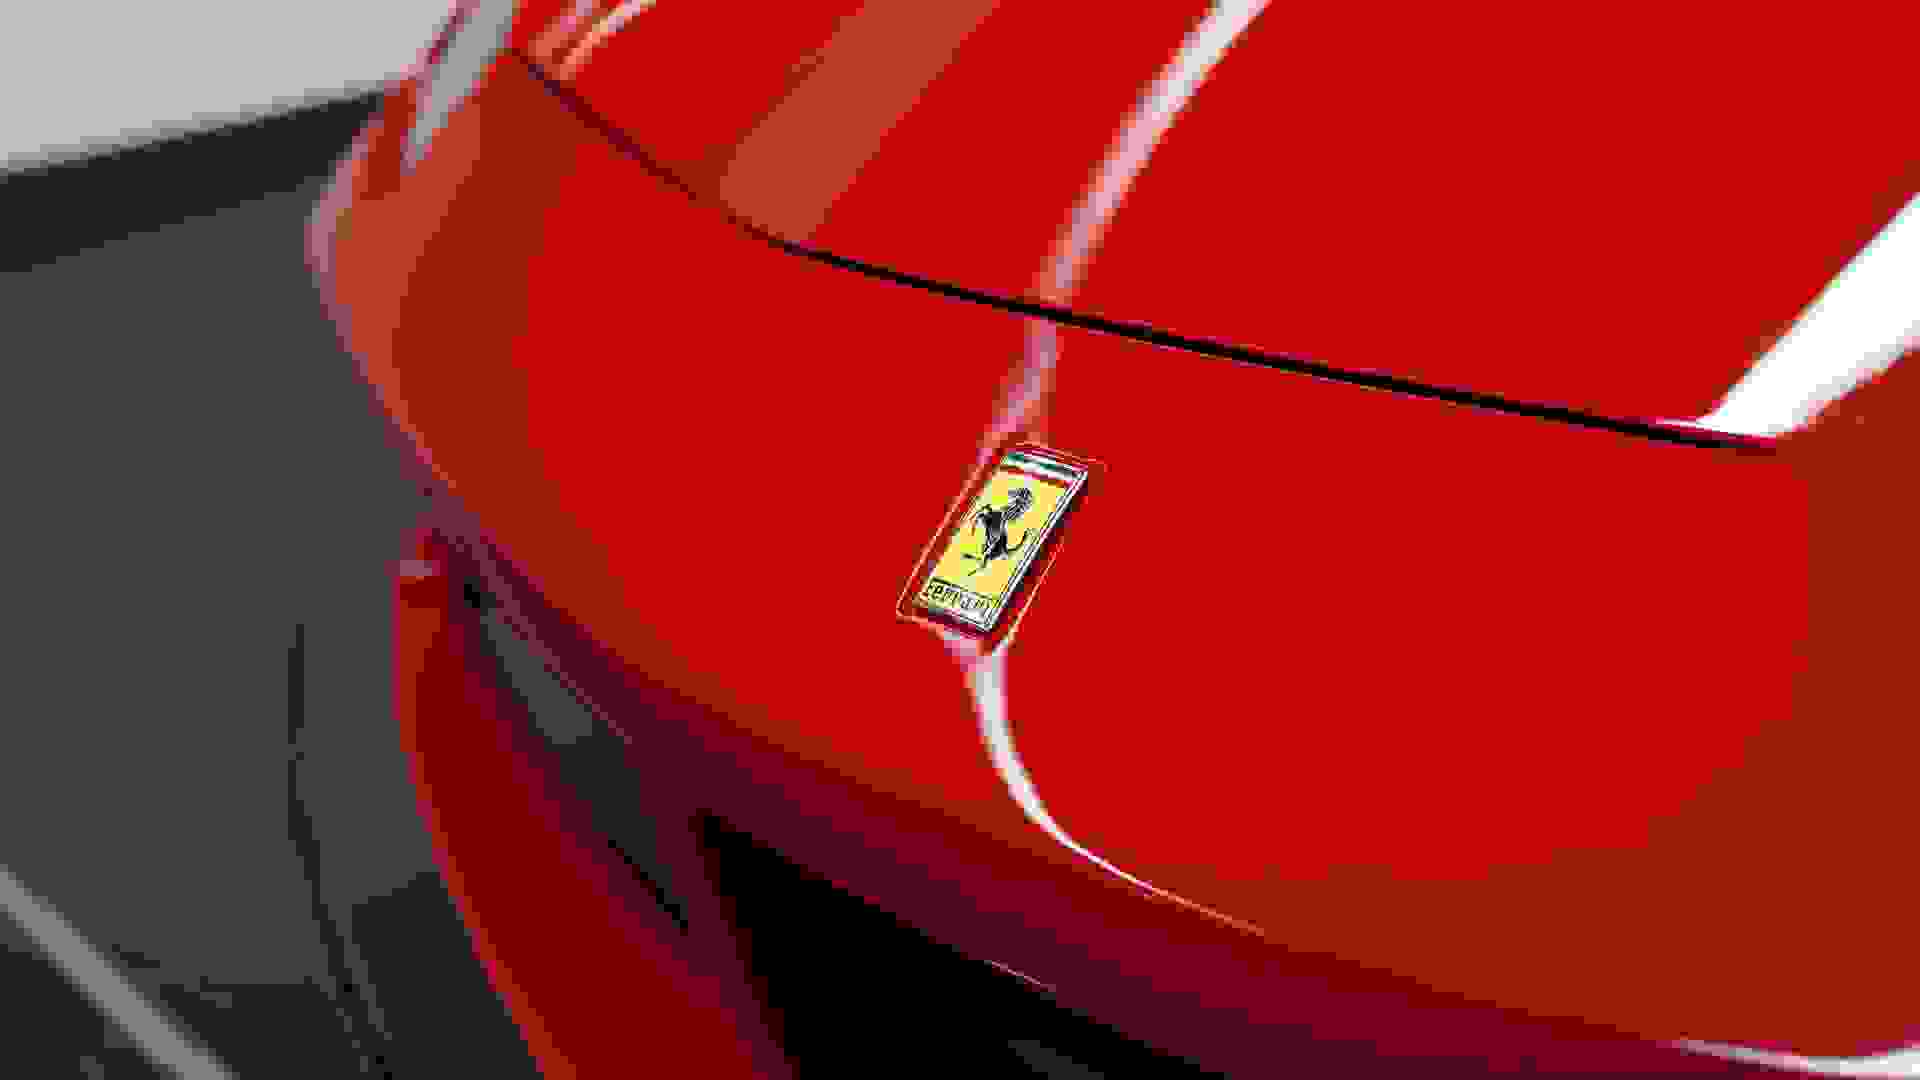 Ferrari 488 Photo 8f09d7a5-393a-4b27-a1f7-298b8572f53e.jpg